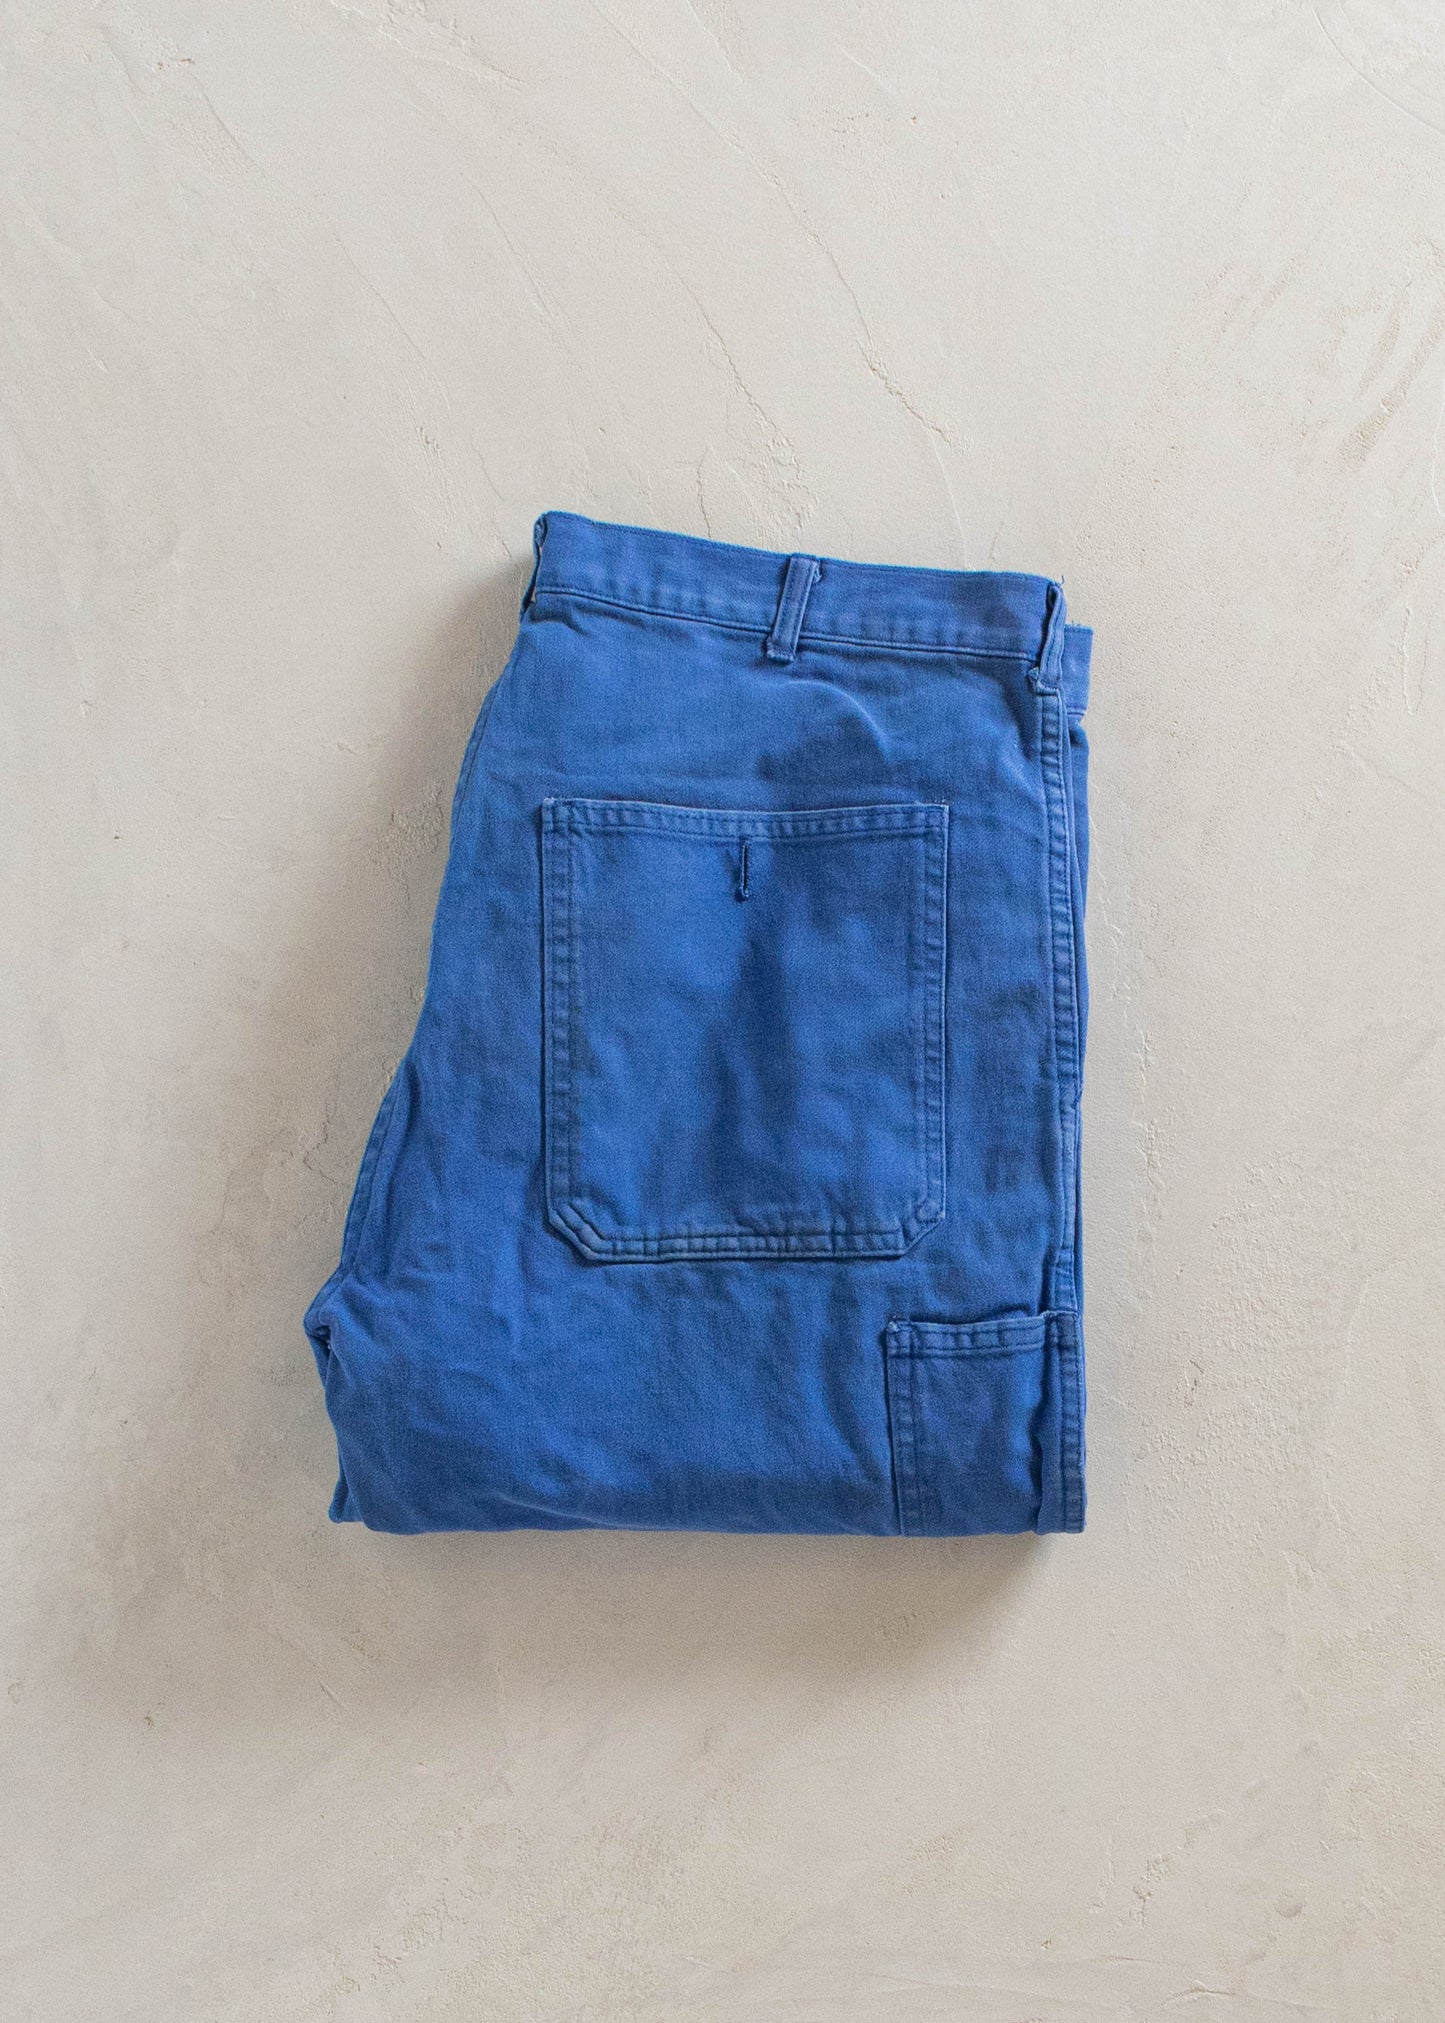 1980s French Workwear Chore Pants Size Women's 32 Men's 34